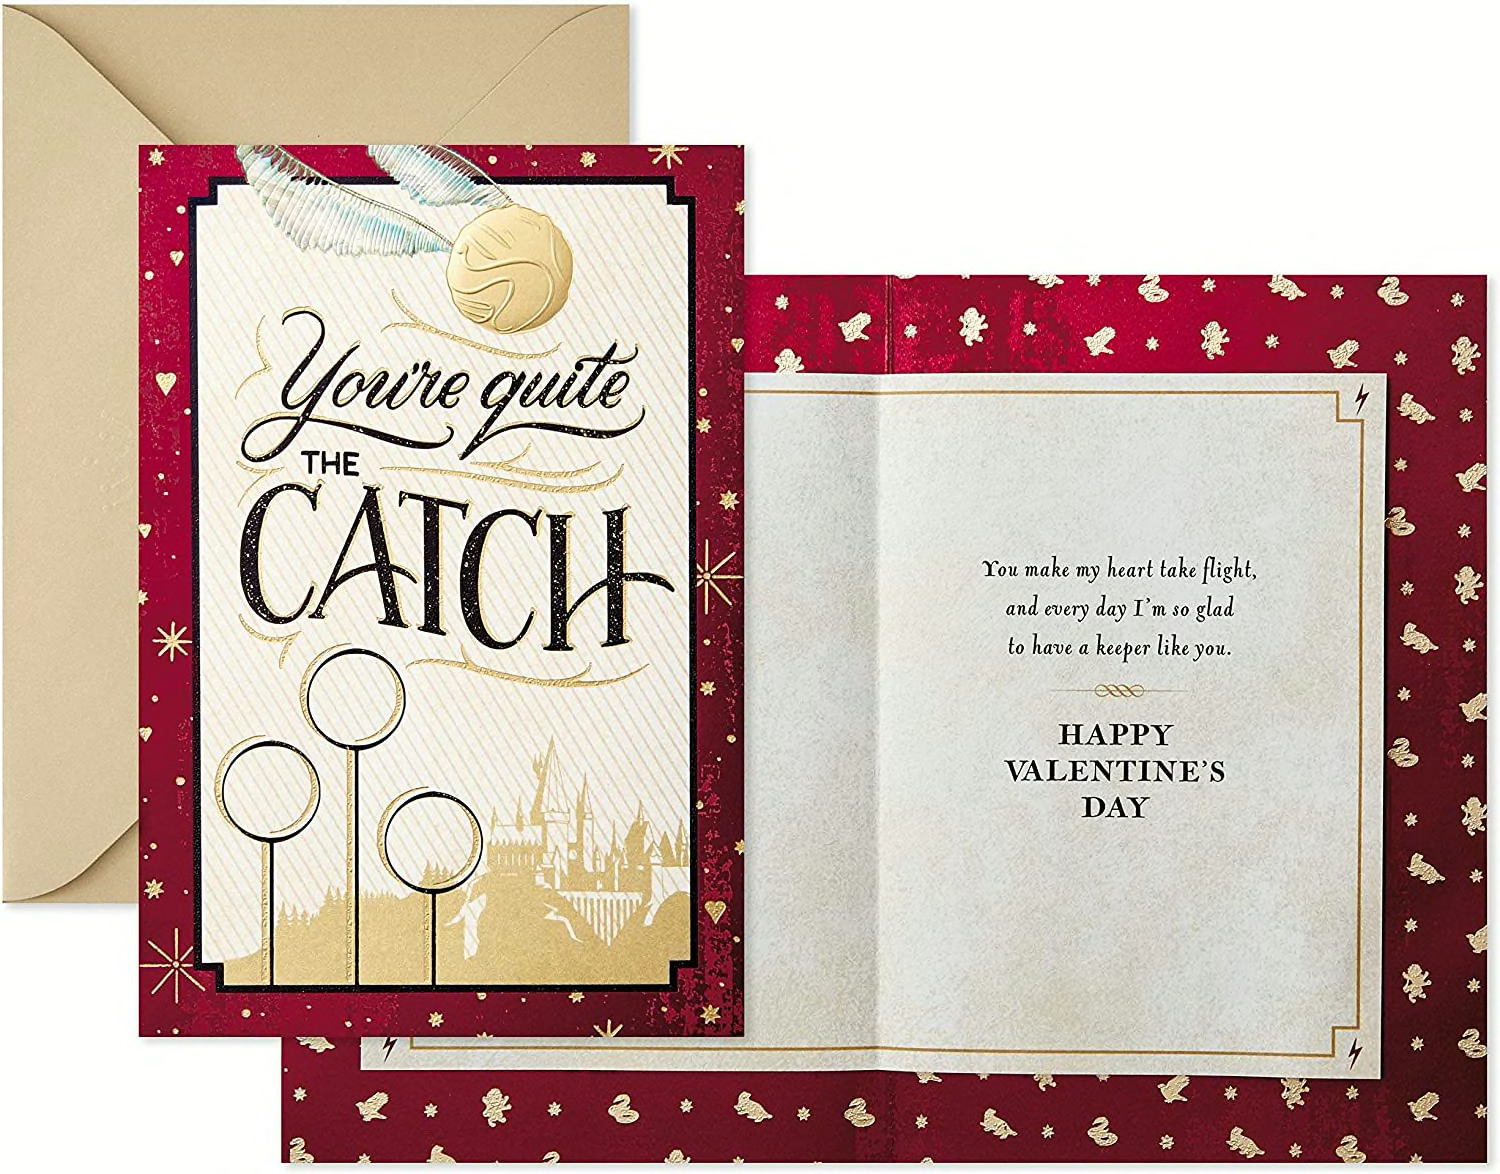 Descubra la tarjeta de San Valentín 'Harry Potter' de Hallmark Marketing Company LLC en Amazon.